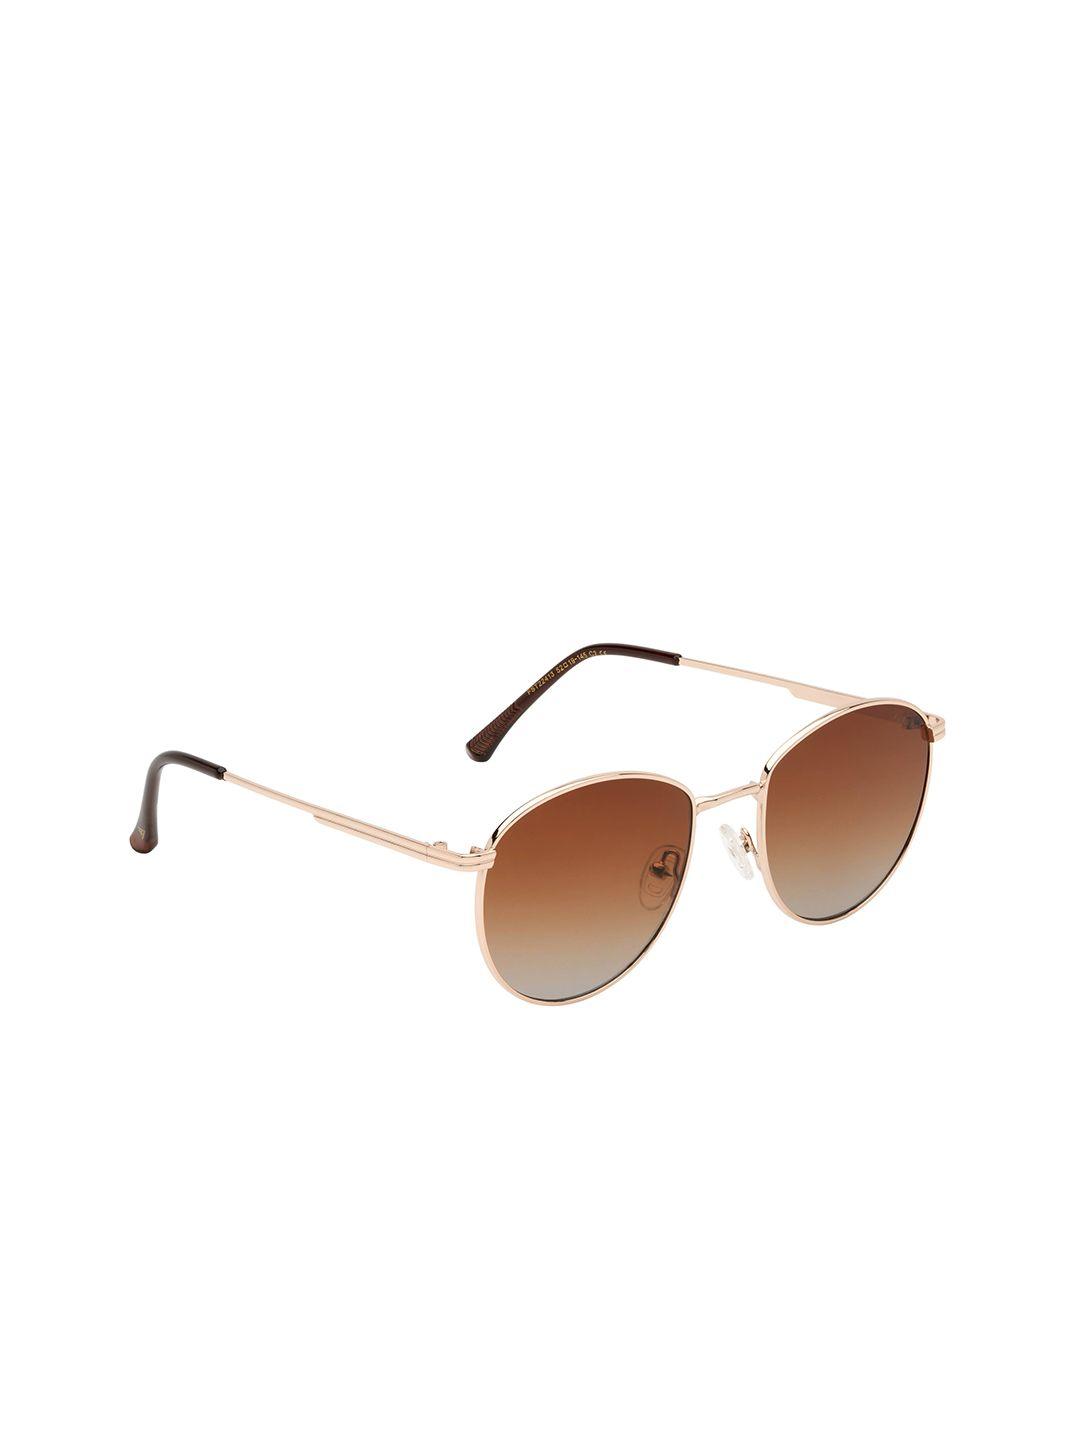 femina flaunt women brown lens & rose gold sunglasses with uv protected lens-fst 22413 c2